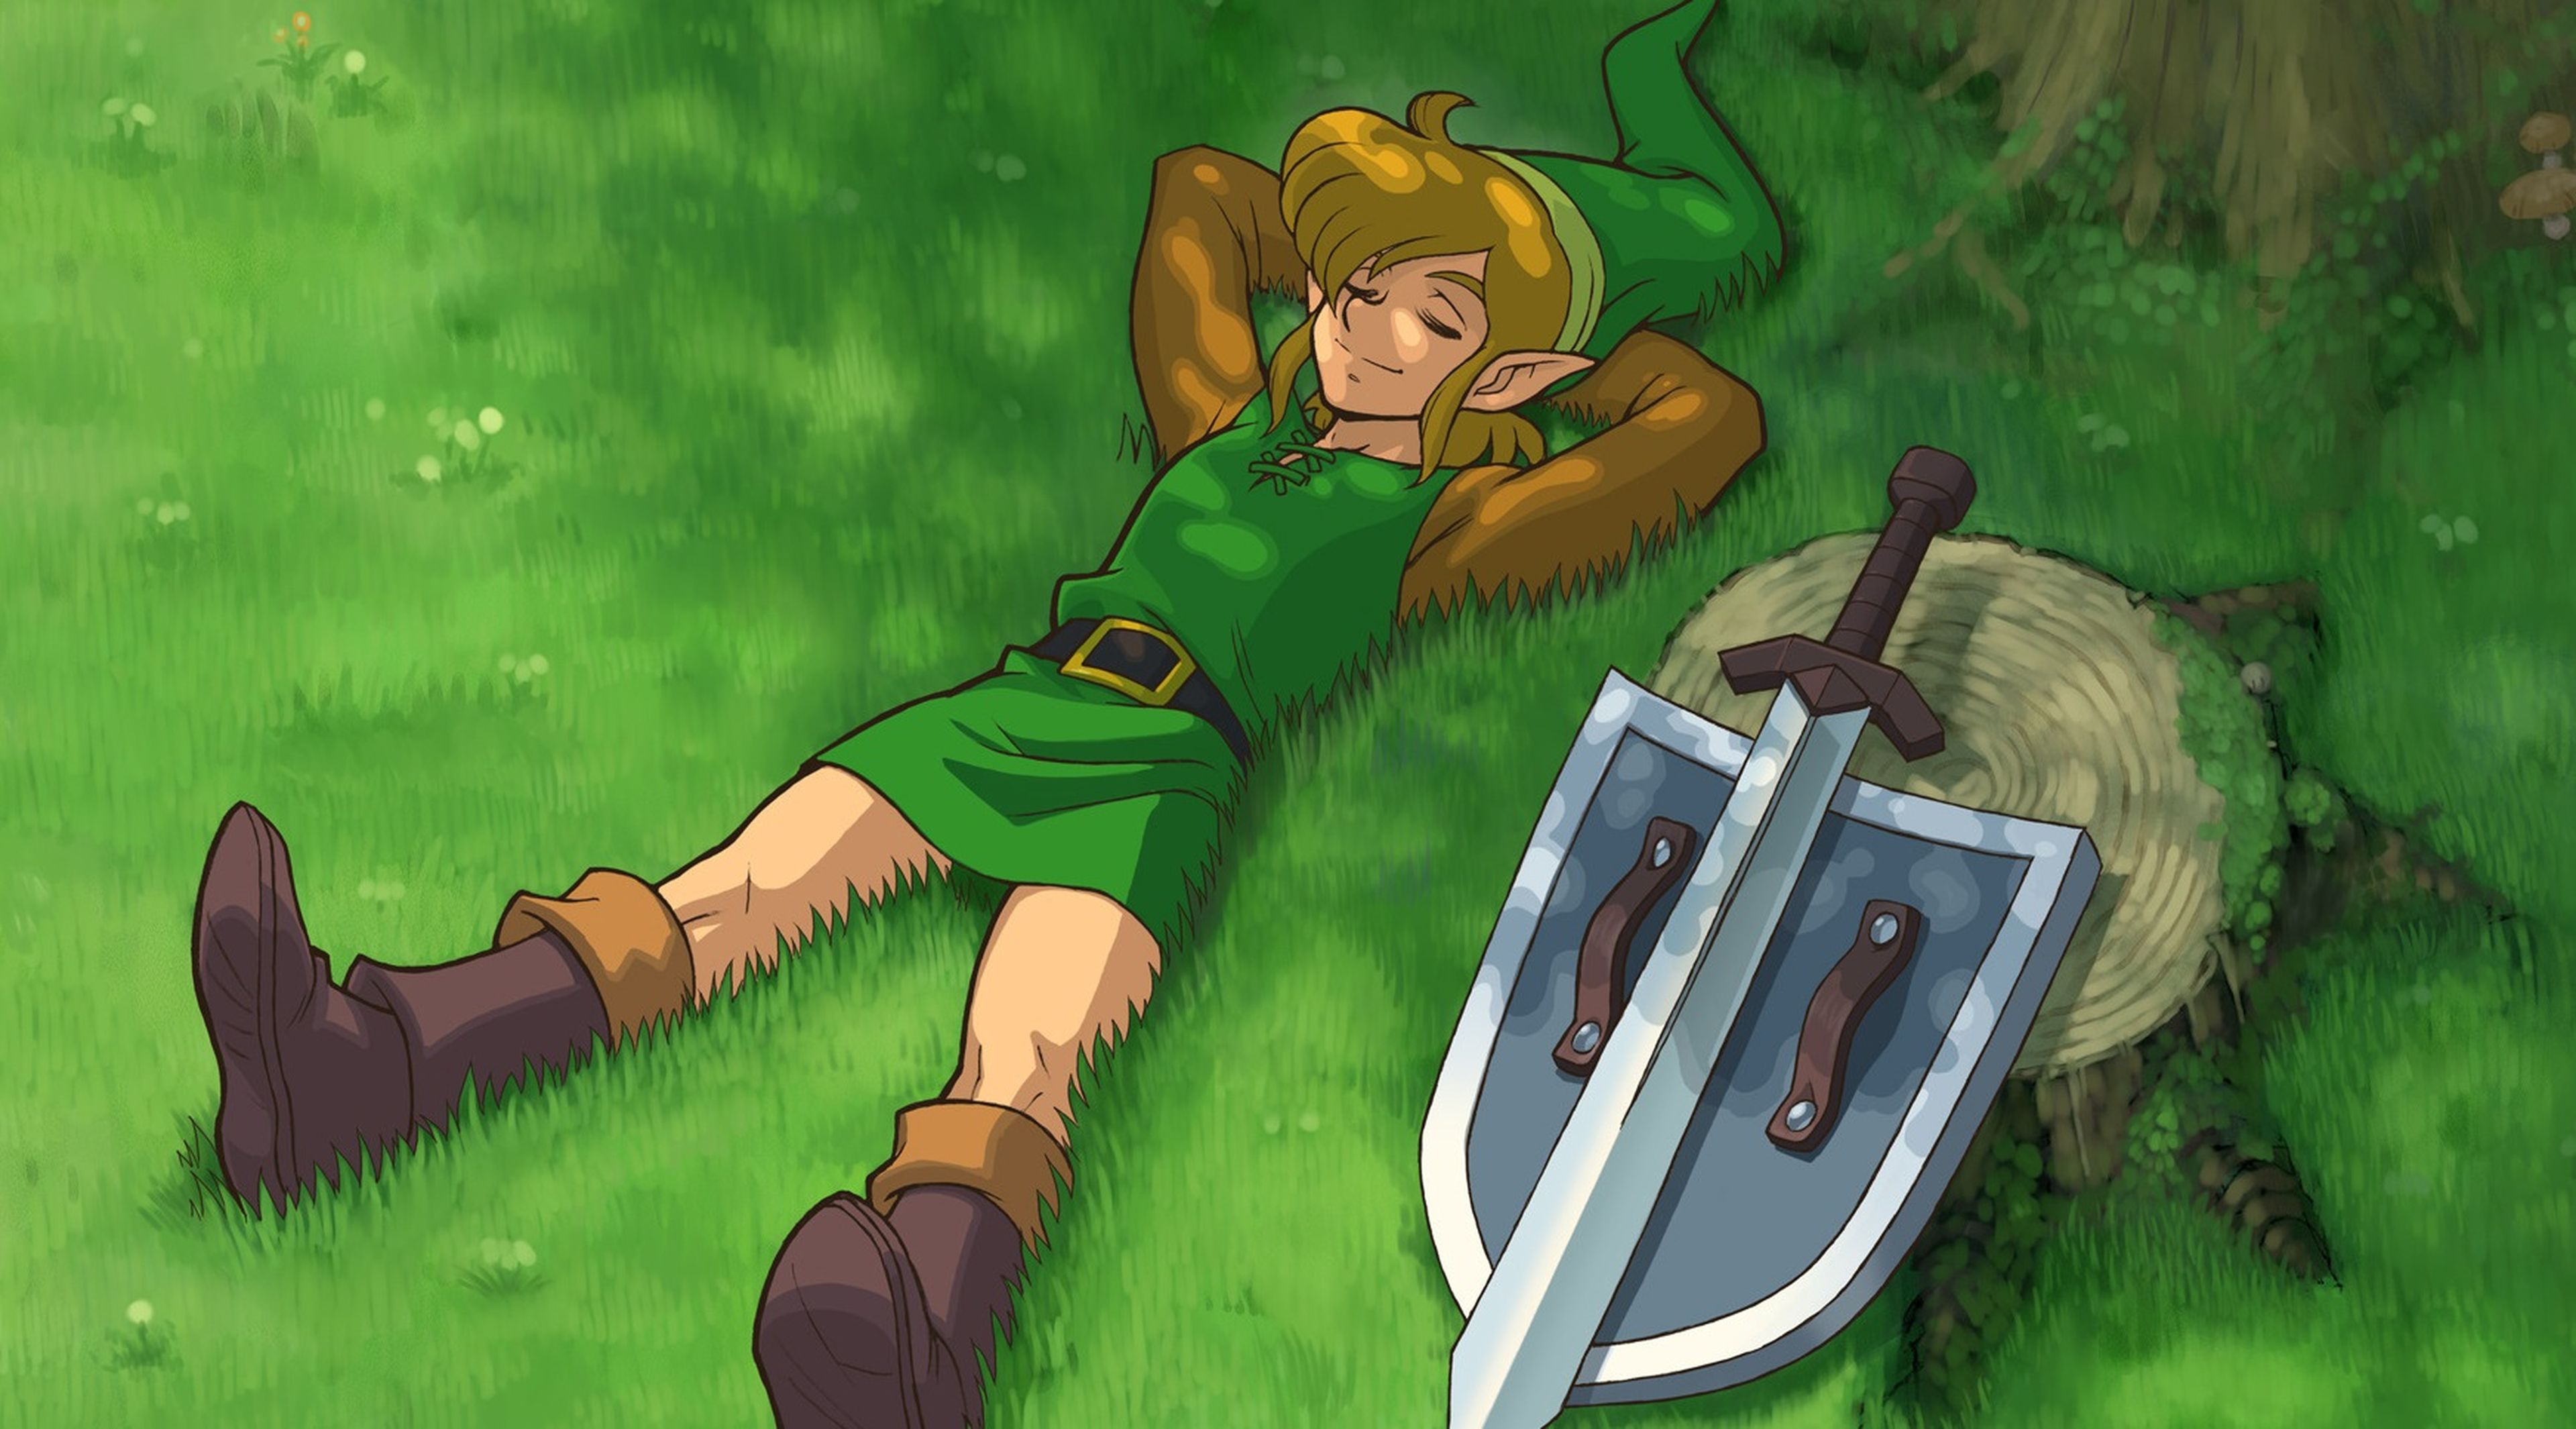 The Legend of Zelda, Aonuma piensa en dar voz a Link